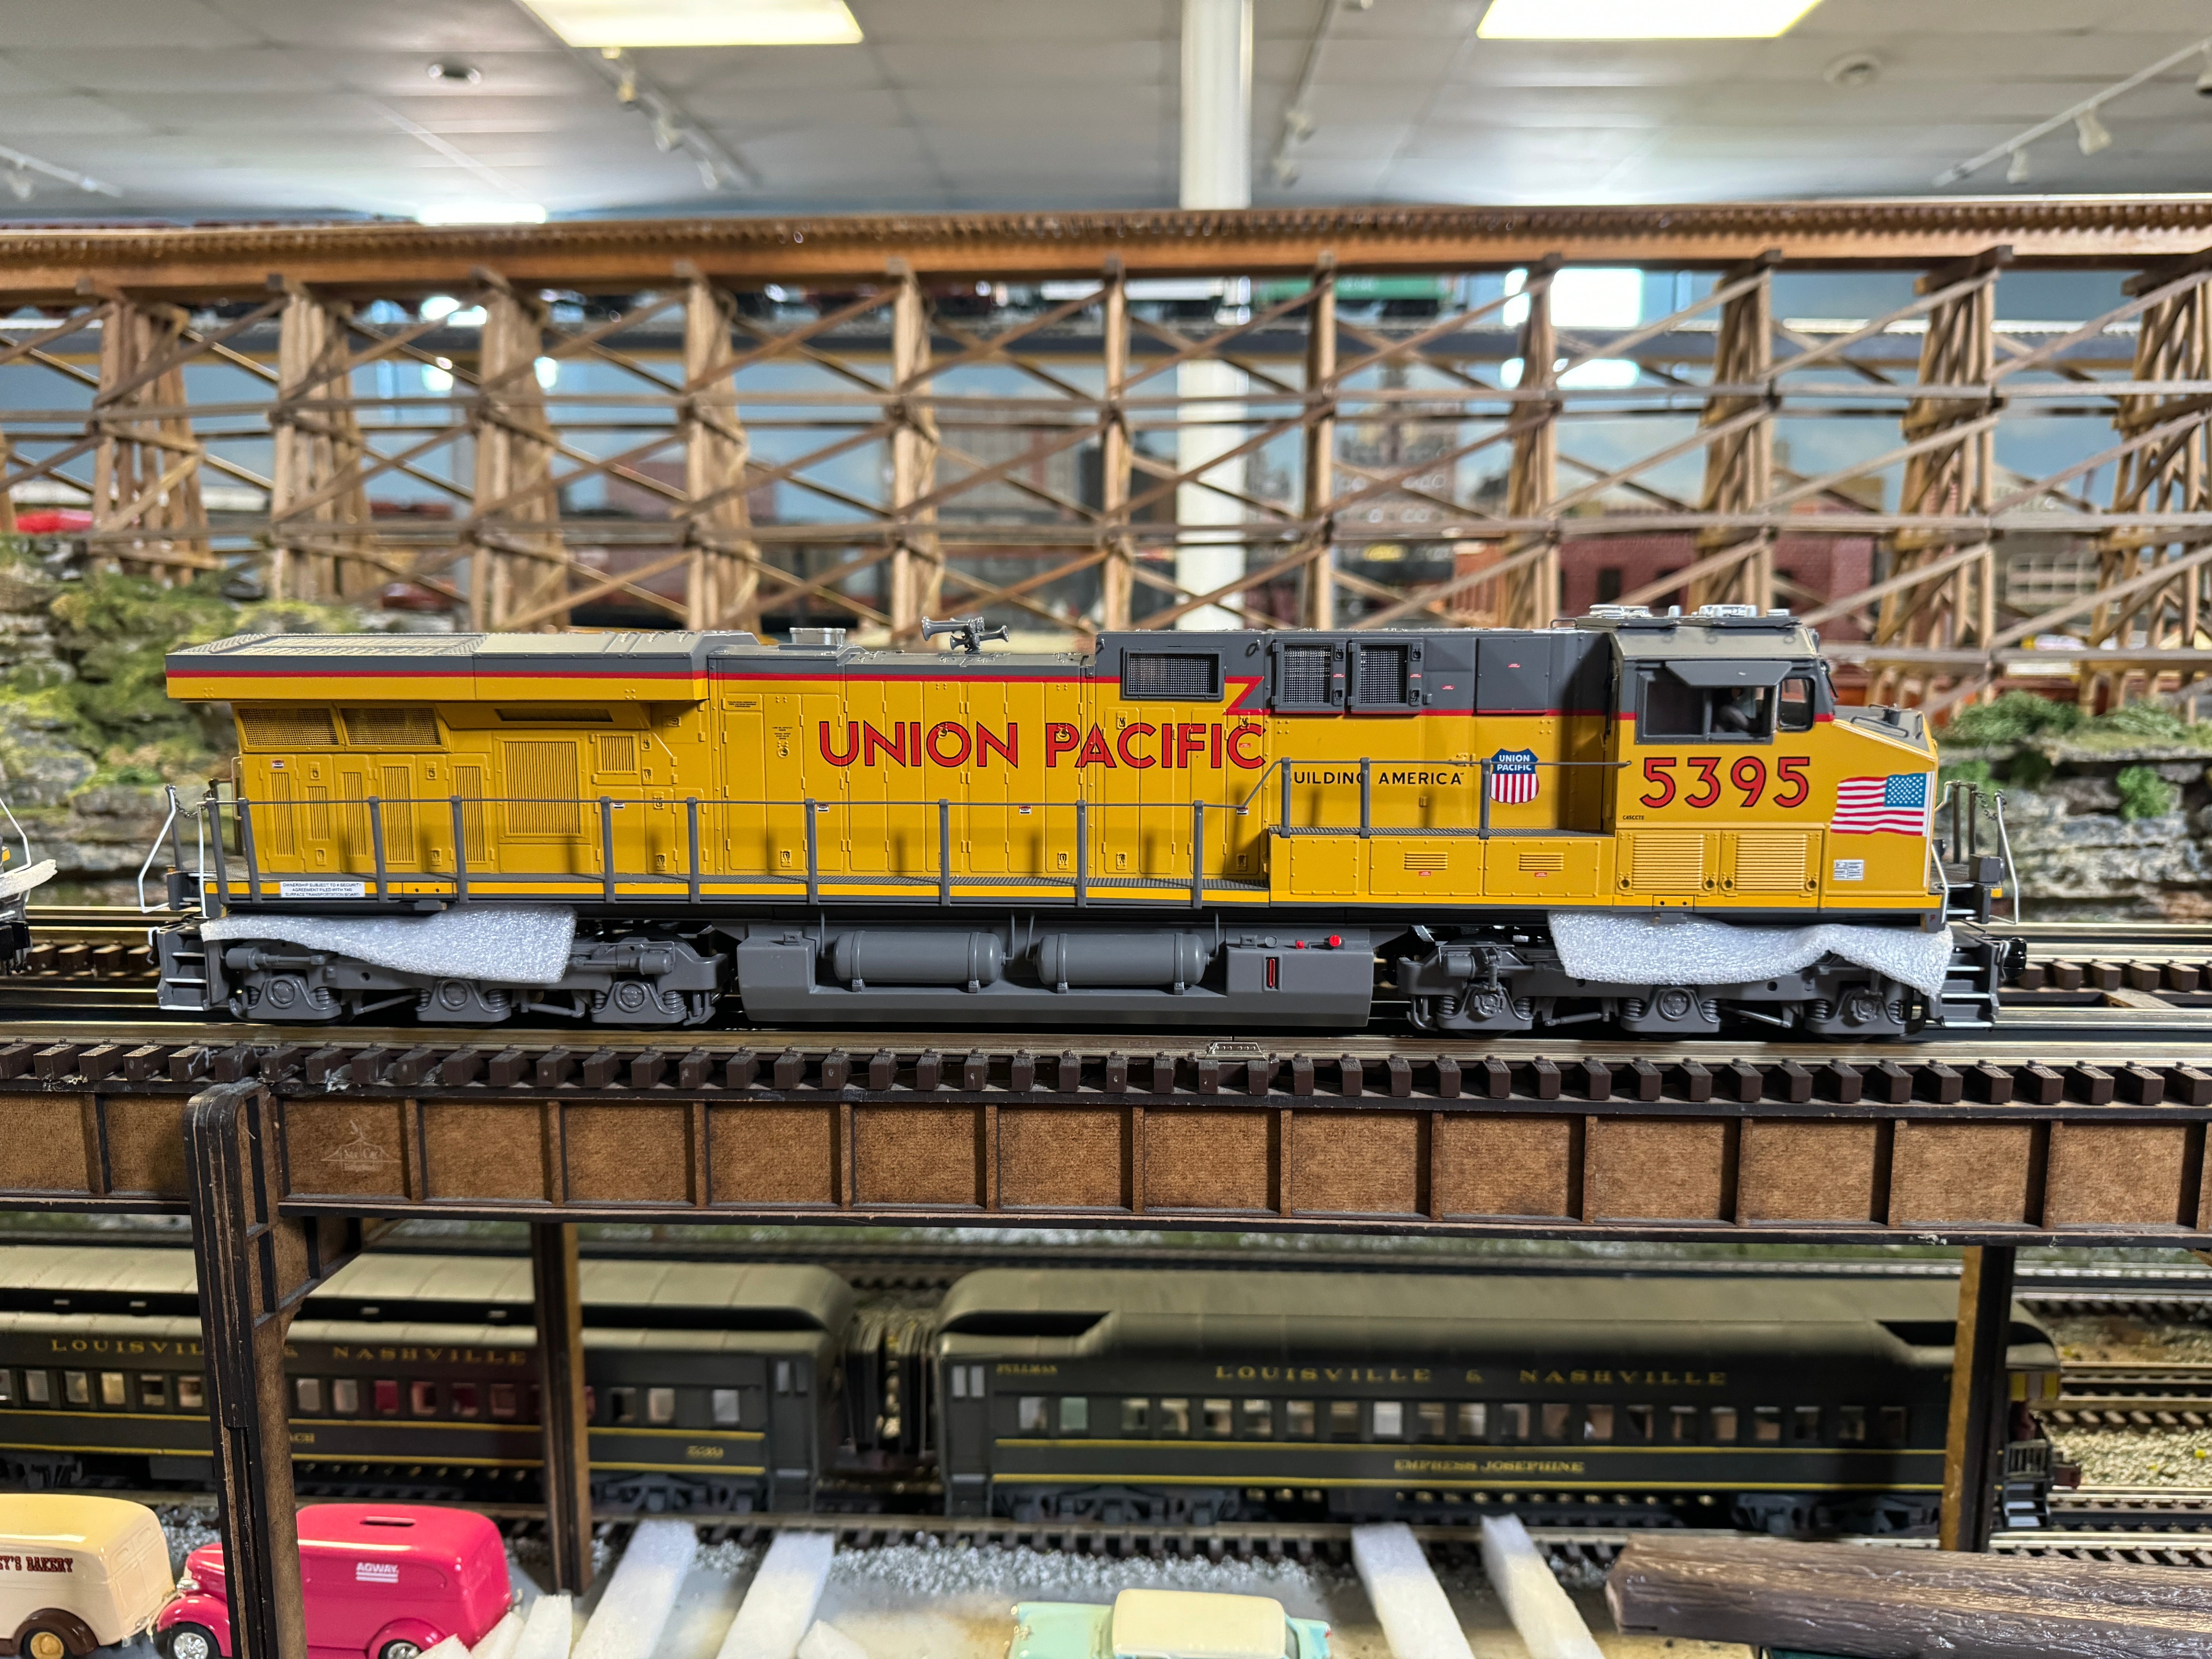 Atlas O 30138183 - Premier - ES44AC Diesel Locomotive "Union Pacific" #5395